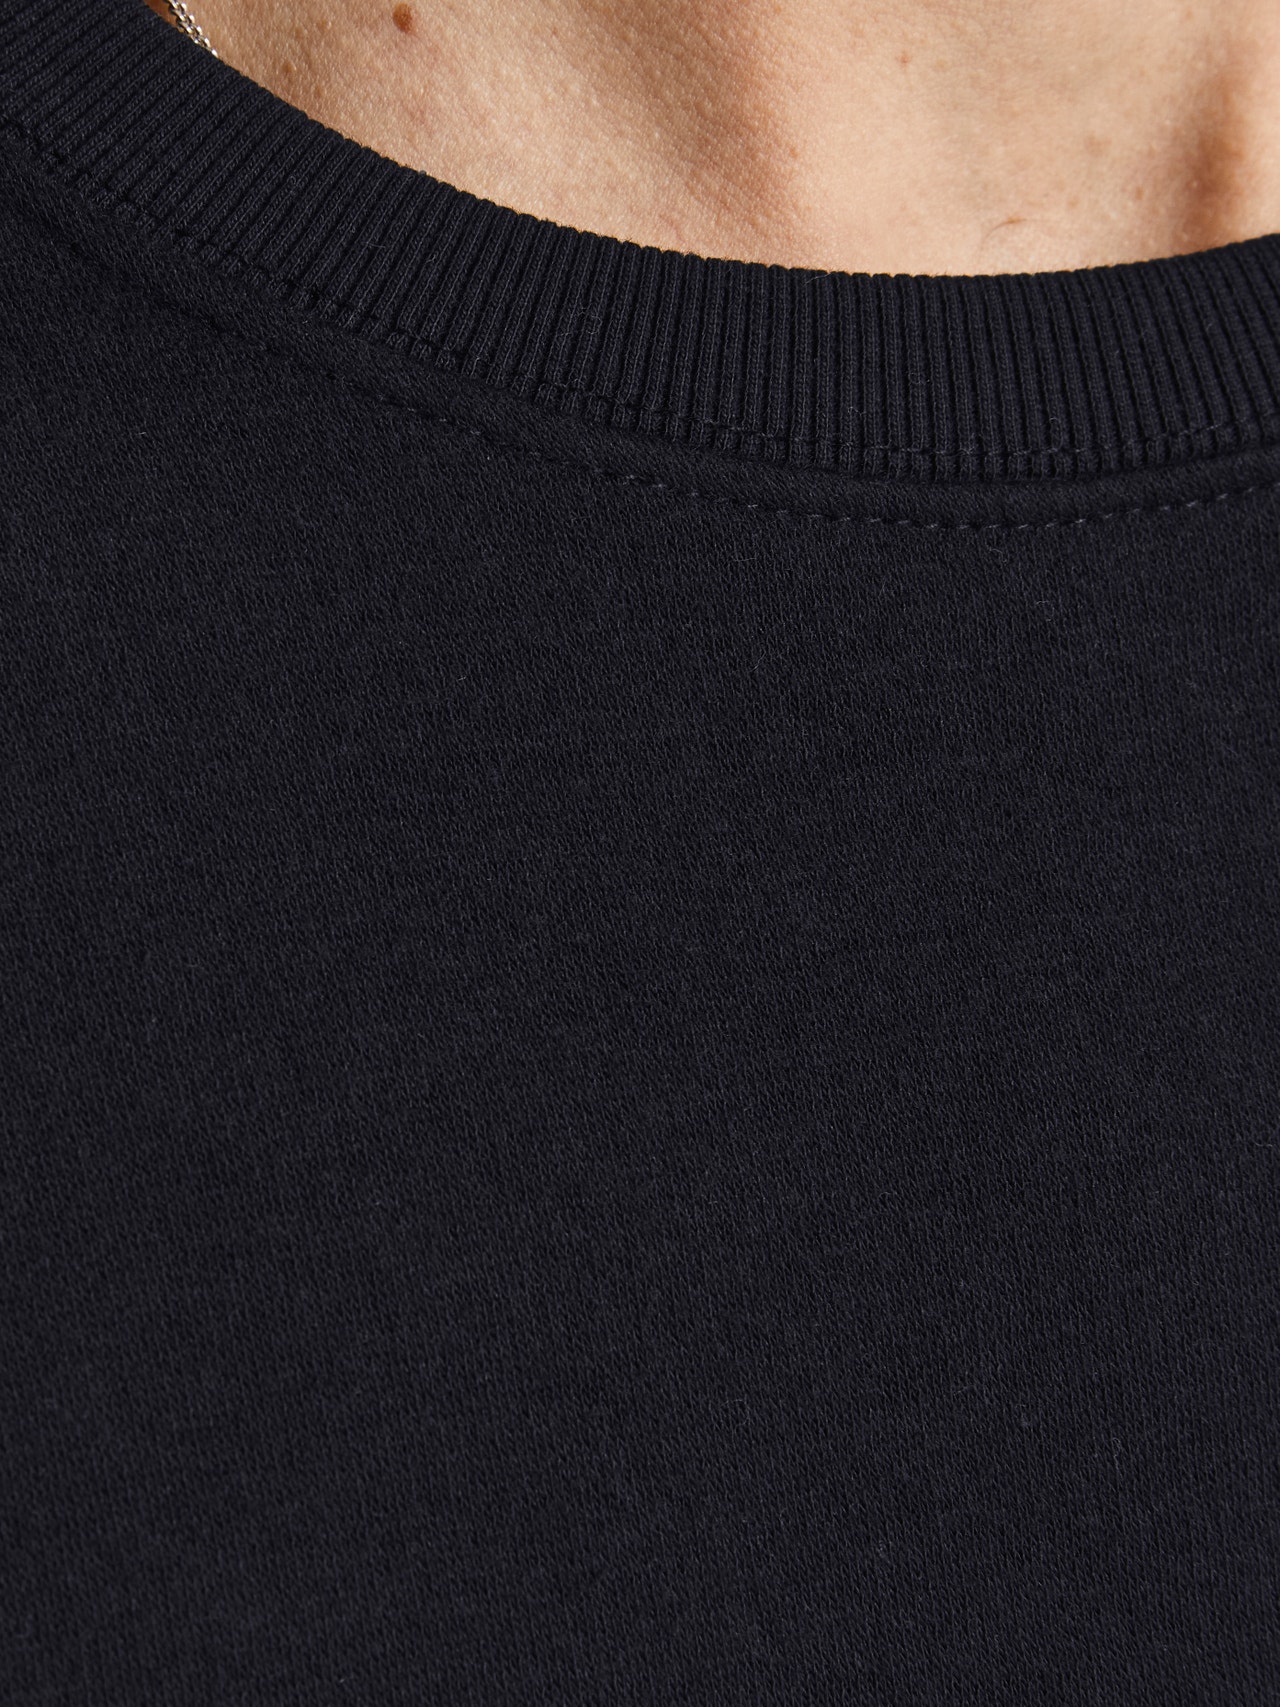 Jack & Jones Plain Crewn Neck Sweatshirt -Black - 12249341